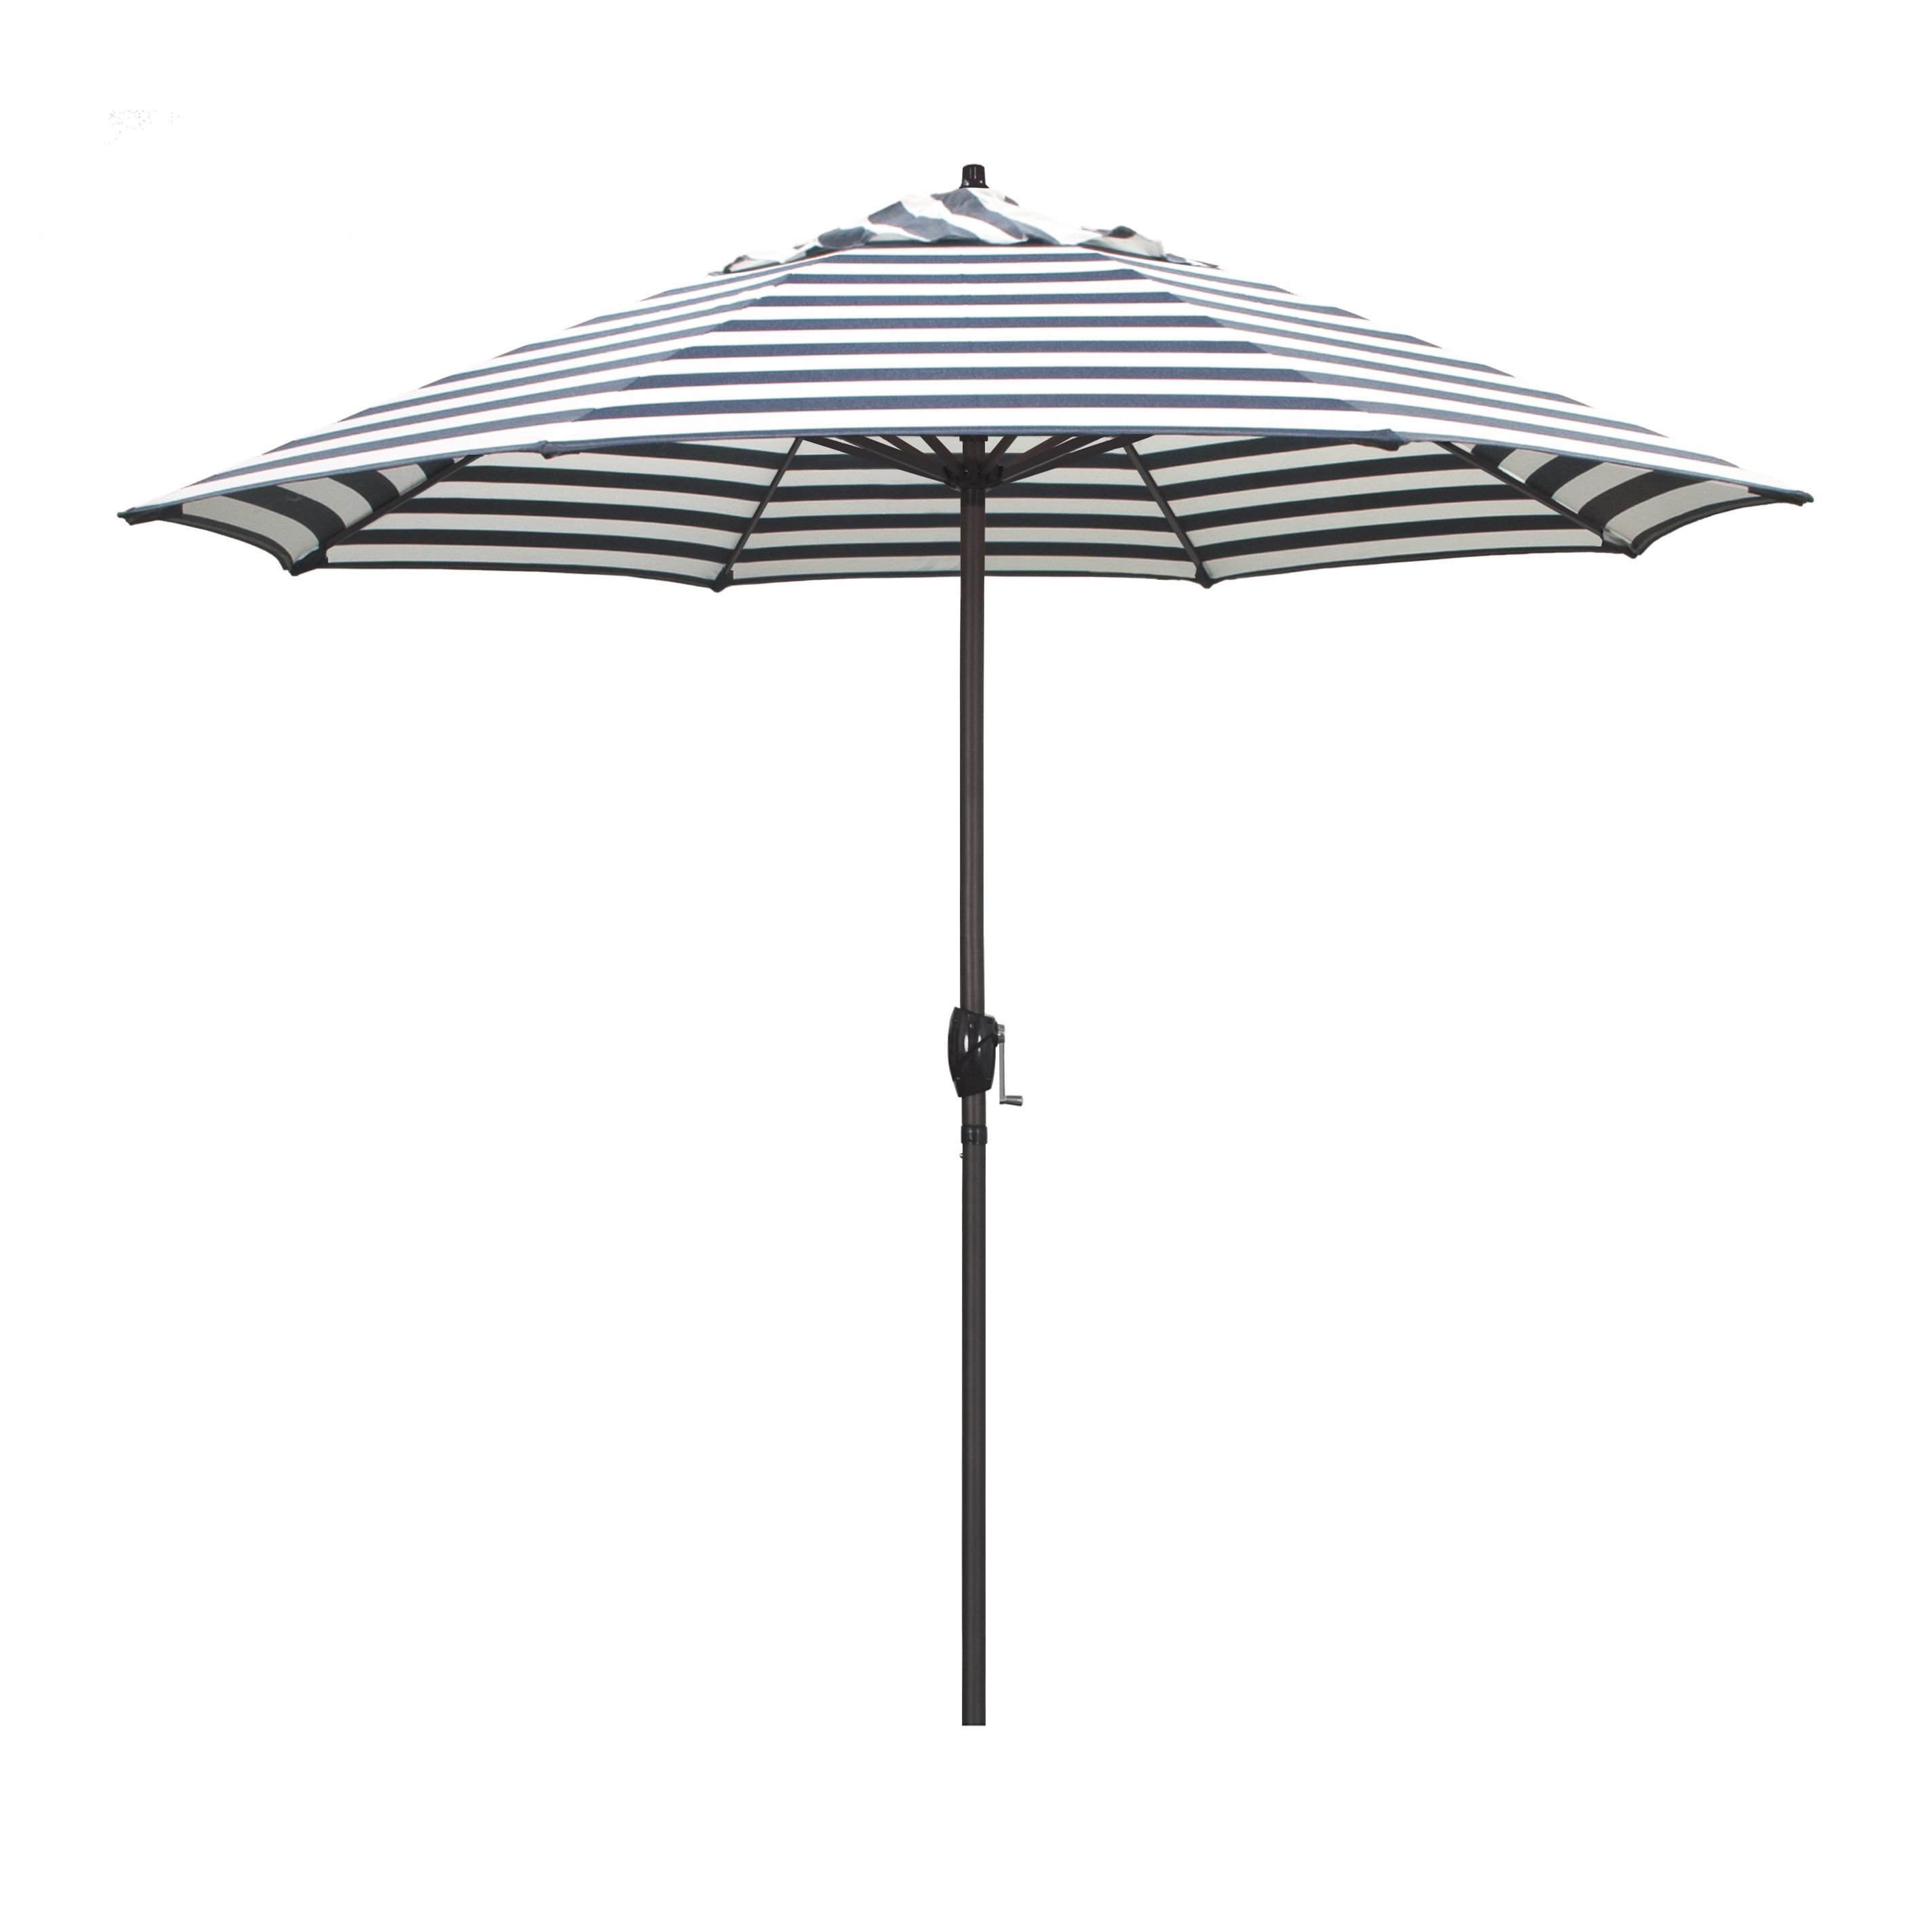 Hapeville Market Umbrellas Regarding Widely Used Cardine 9' Market Umbrella (View 7 of 20)